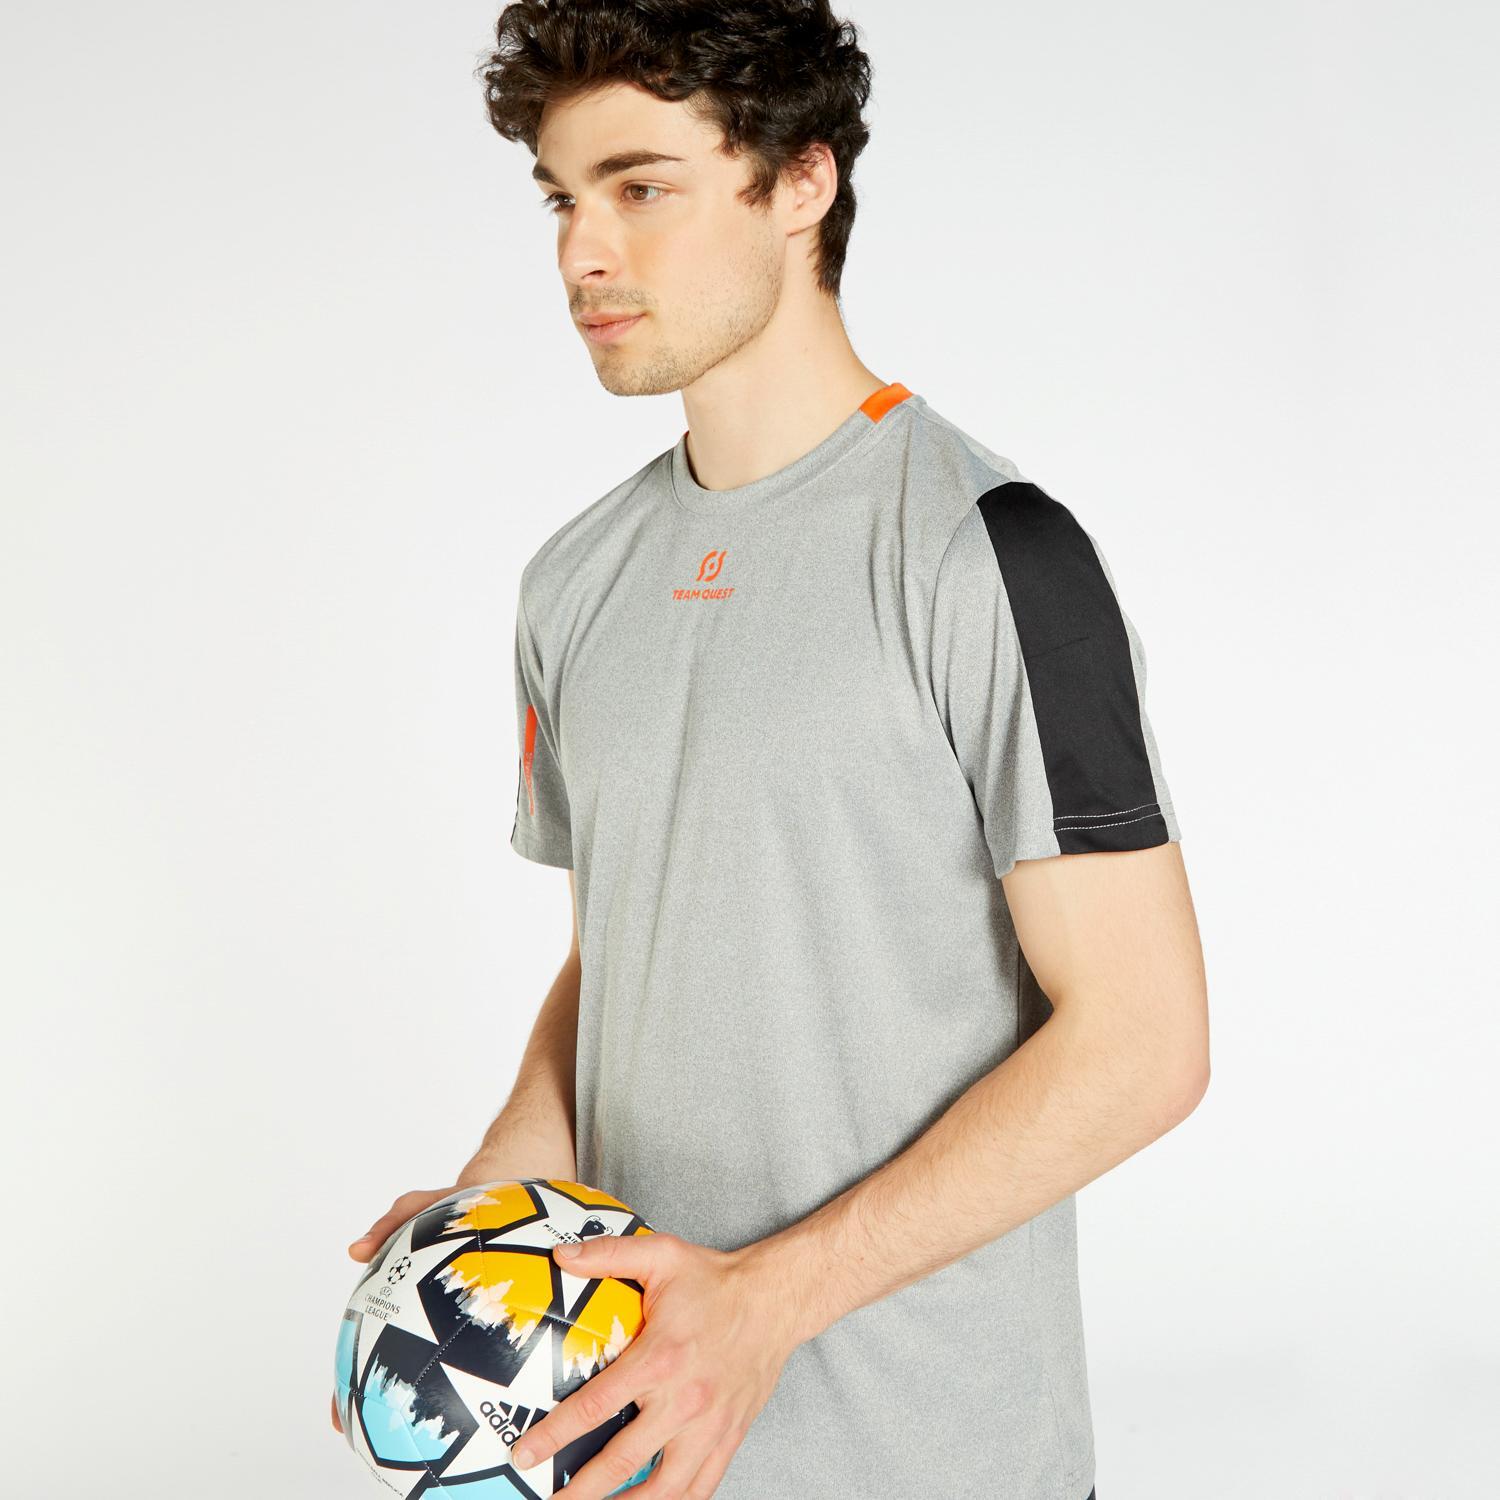 Basic Cro Camiseta M/c Futbol Pol Drytec - GRIS sports taille S